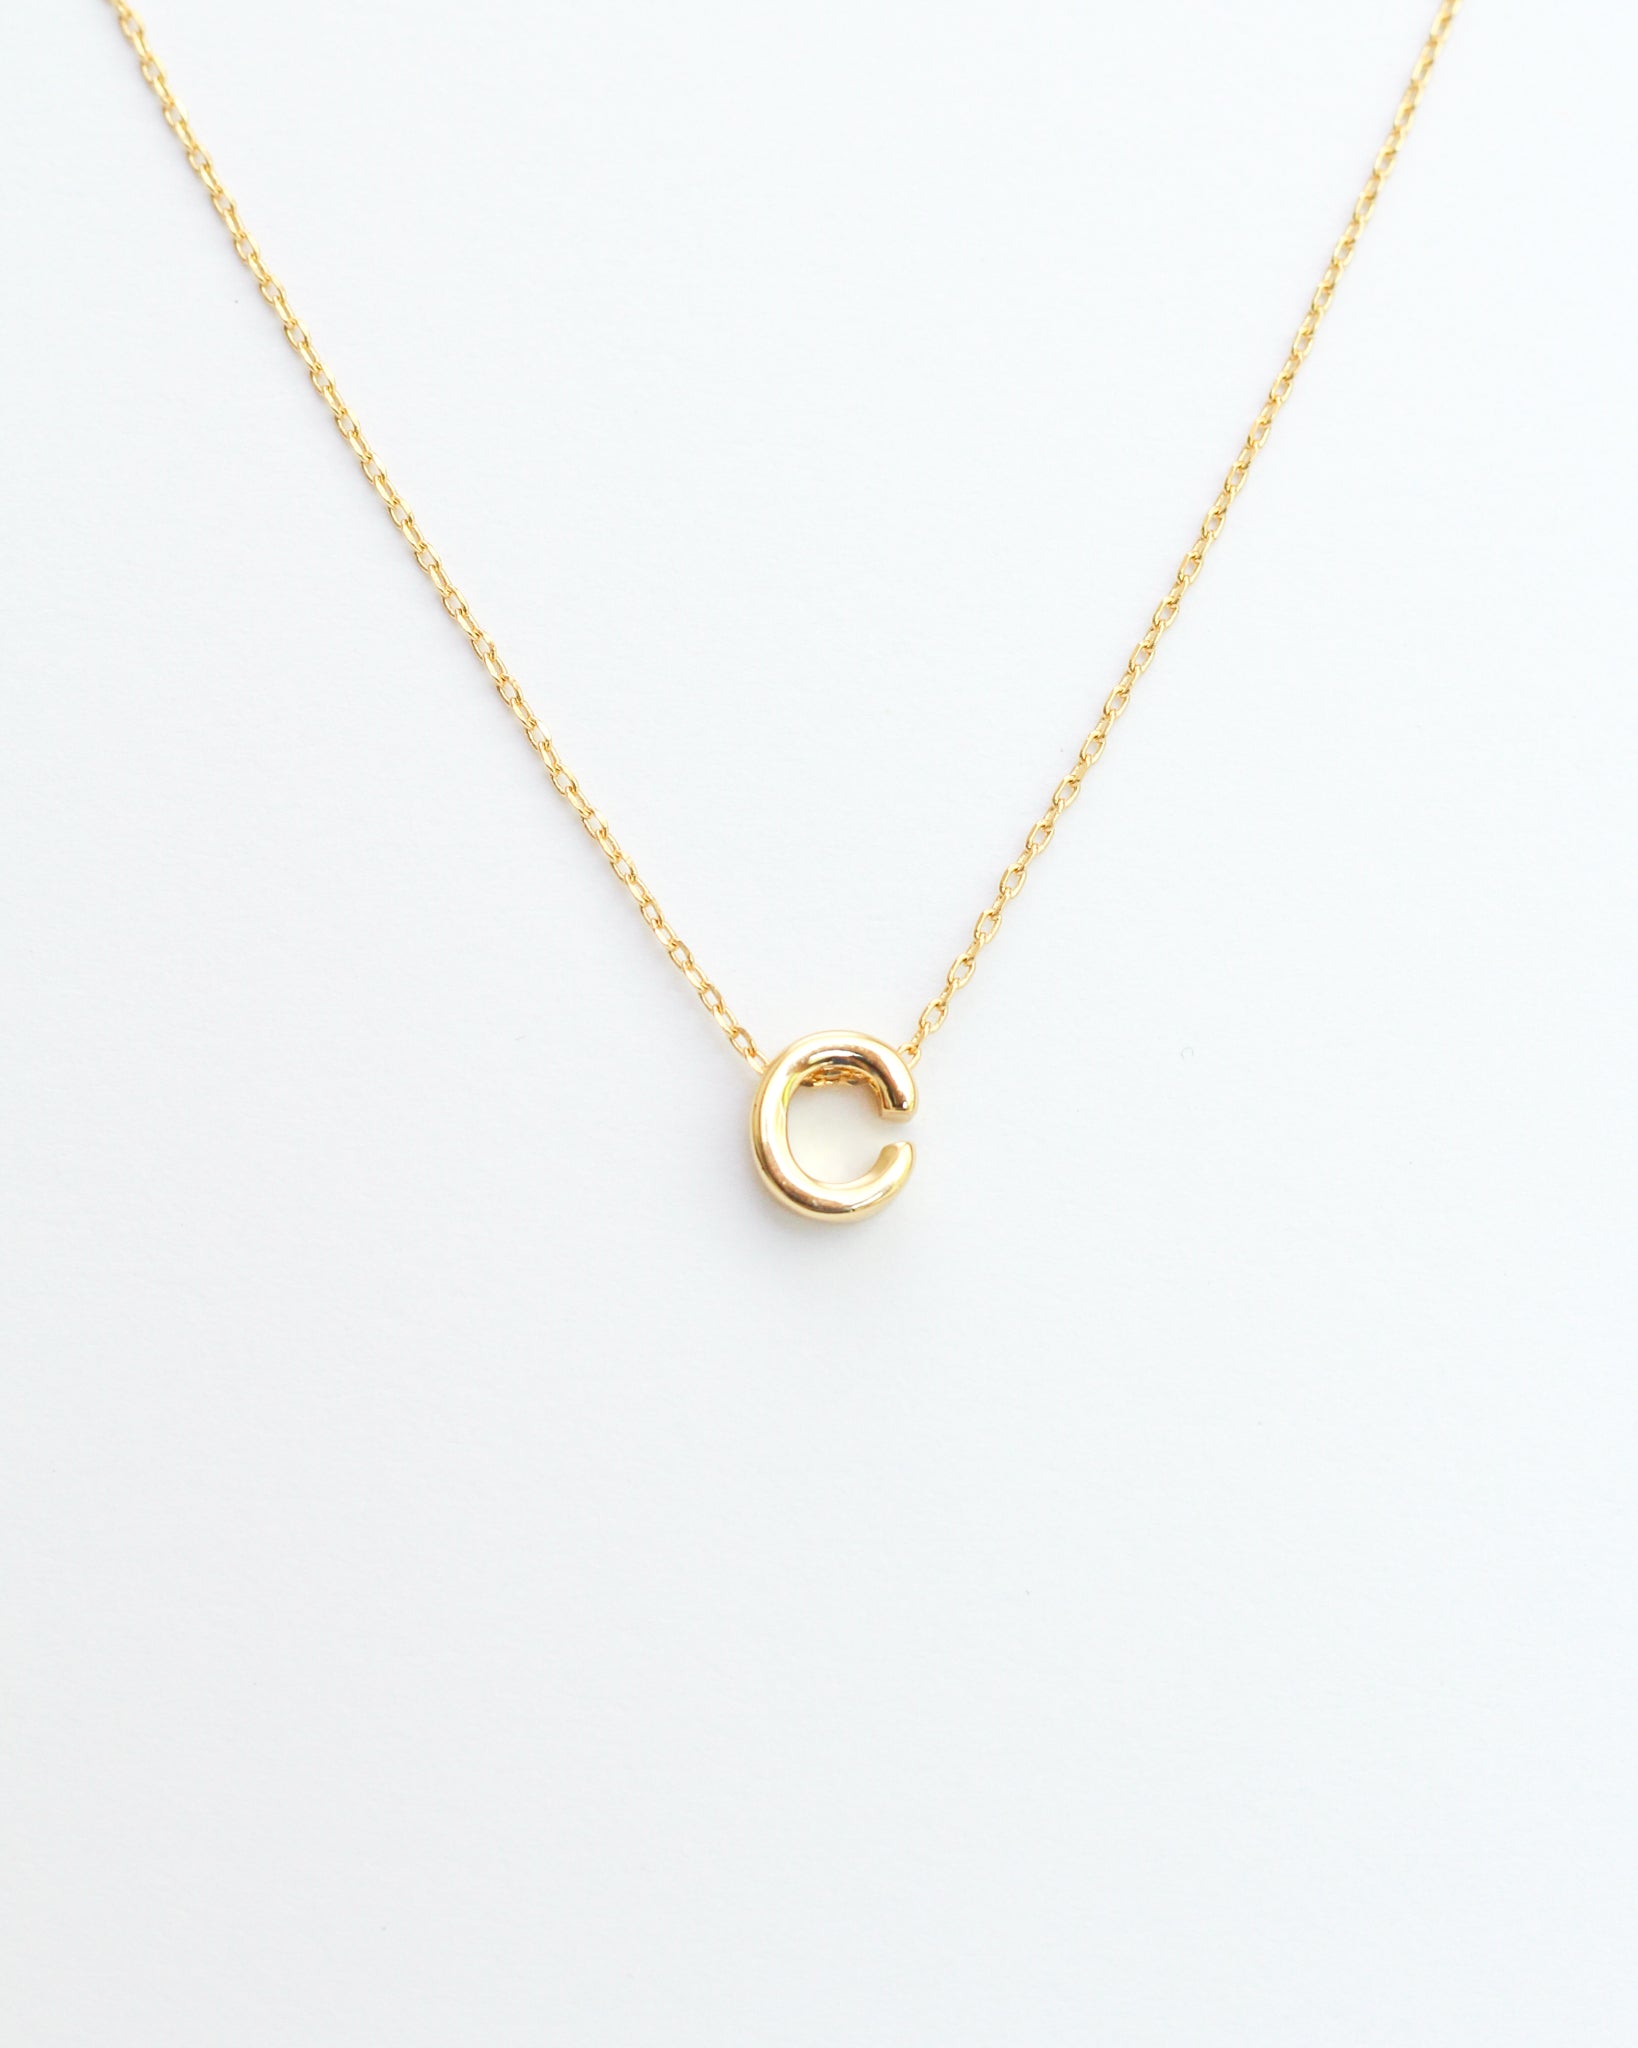 Gold Initial Letter Block Necklace. Letter C necklace